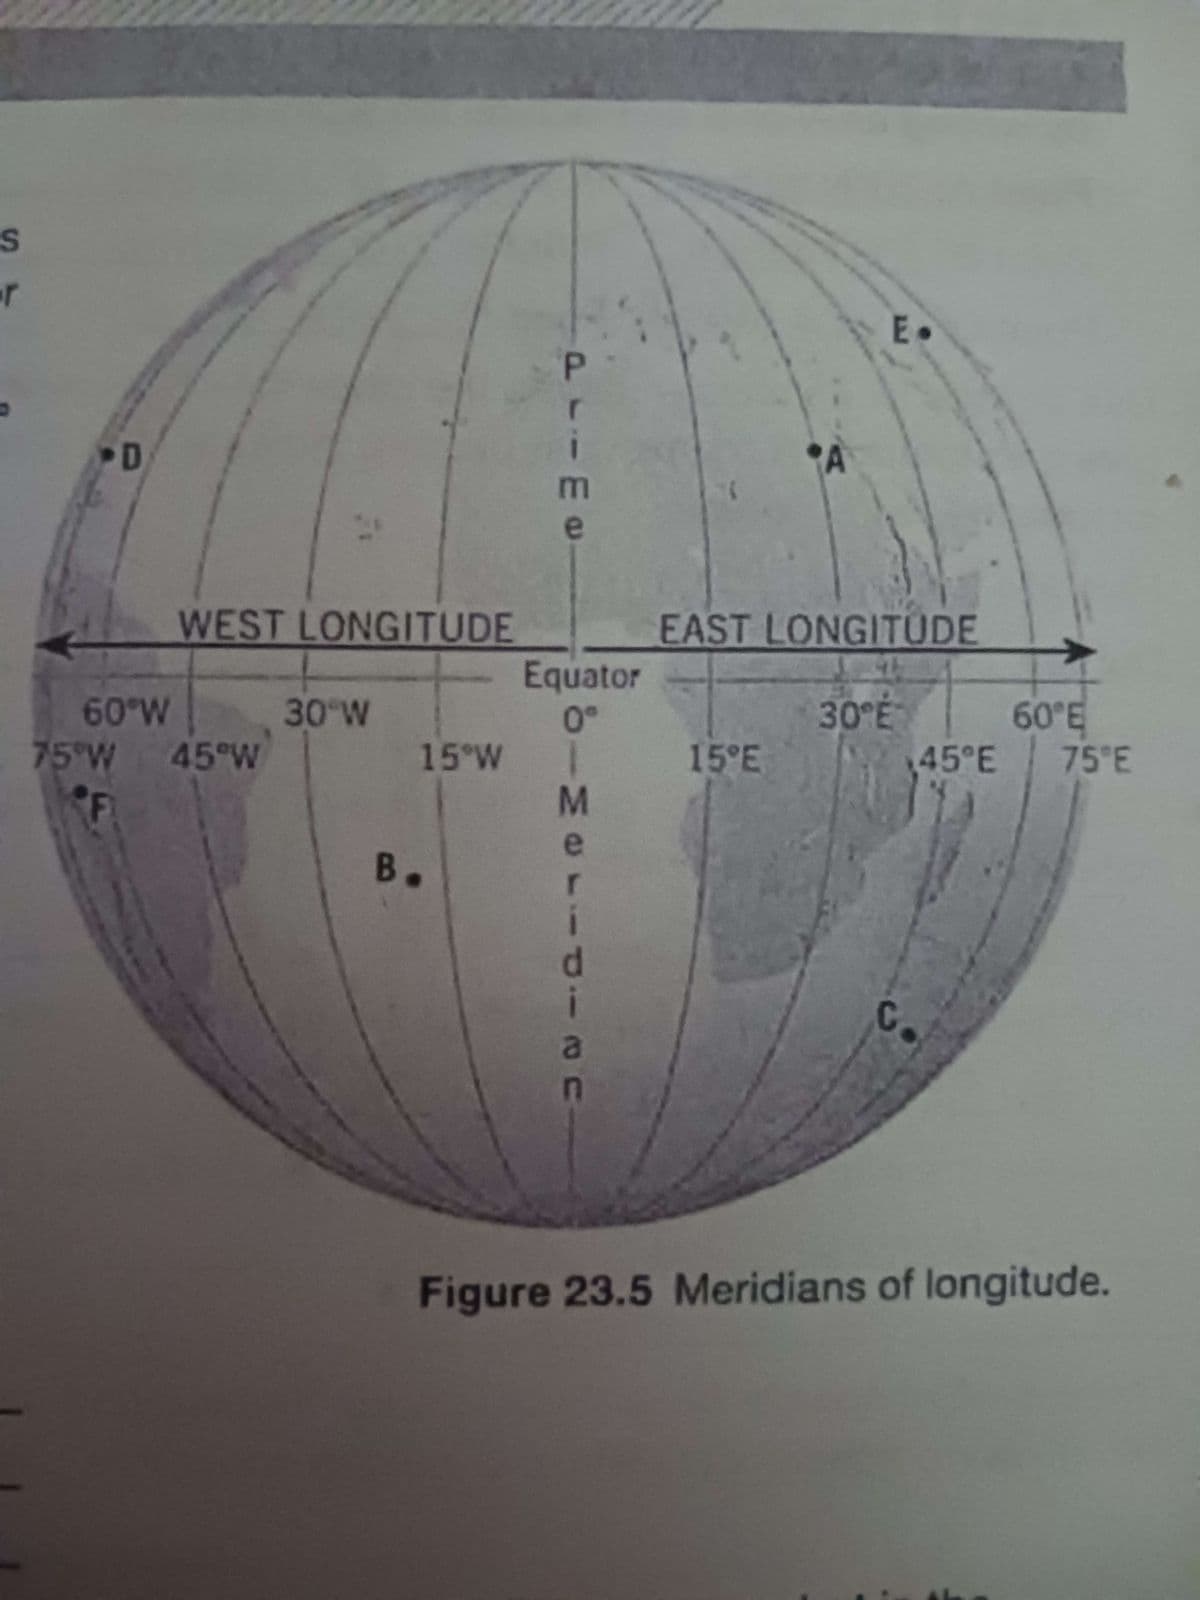 S
r
D
60°W
75 W
F
WEST LONGITUDE
45°W
30 W
15°W
B.
P
r
1
- Eo
Equator
0°
M
e
r
UEI
A
15°E
E.
EAST LONGITUDE
30°Ė-
C
60°E
45°E 75°E
Figure 23.5 Meridians of longitude.